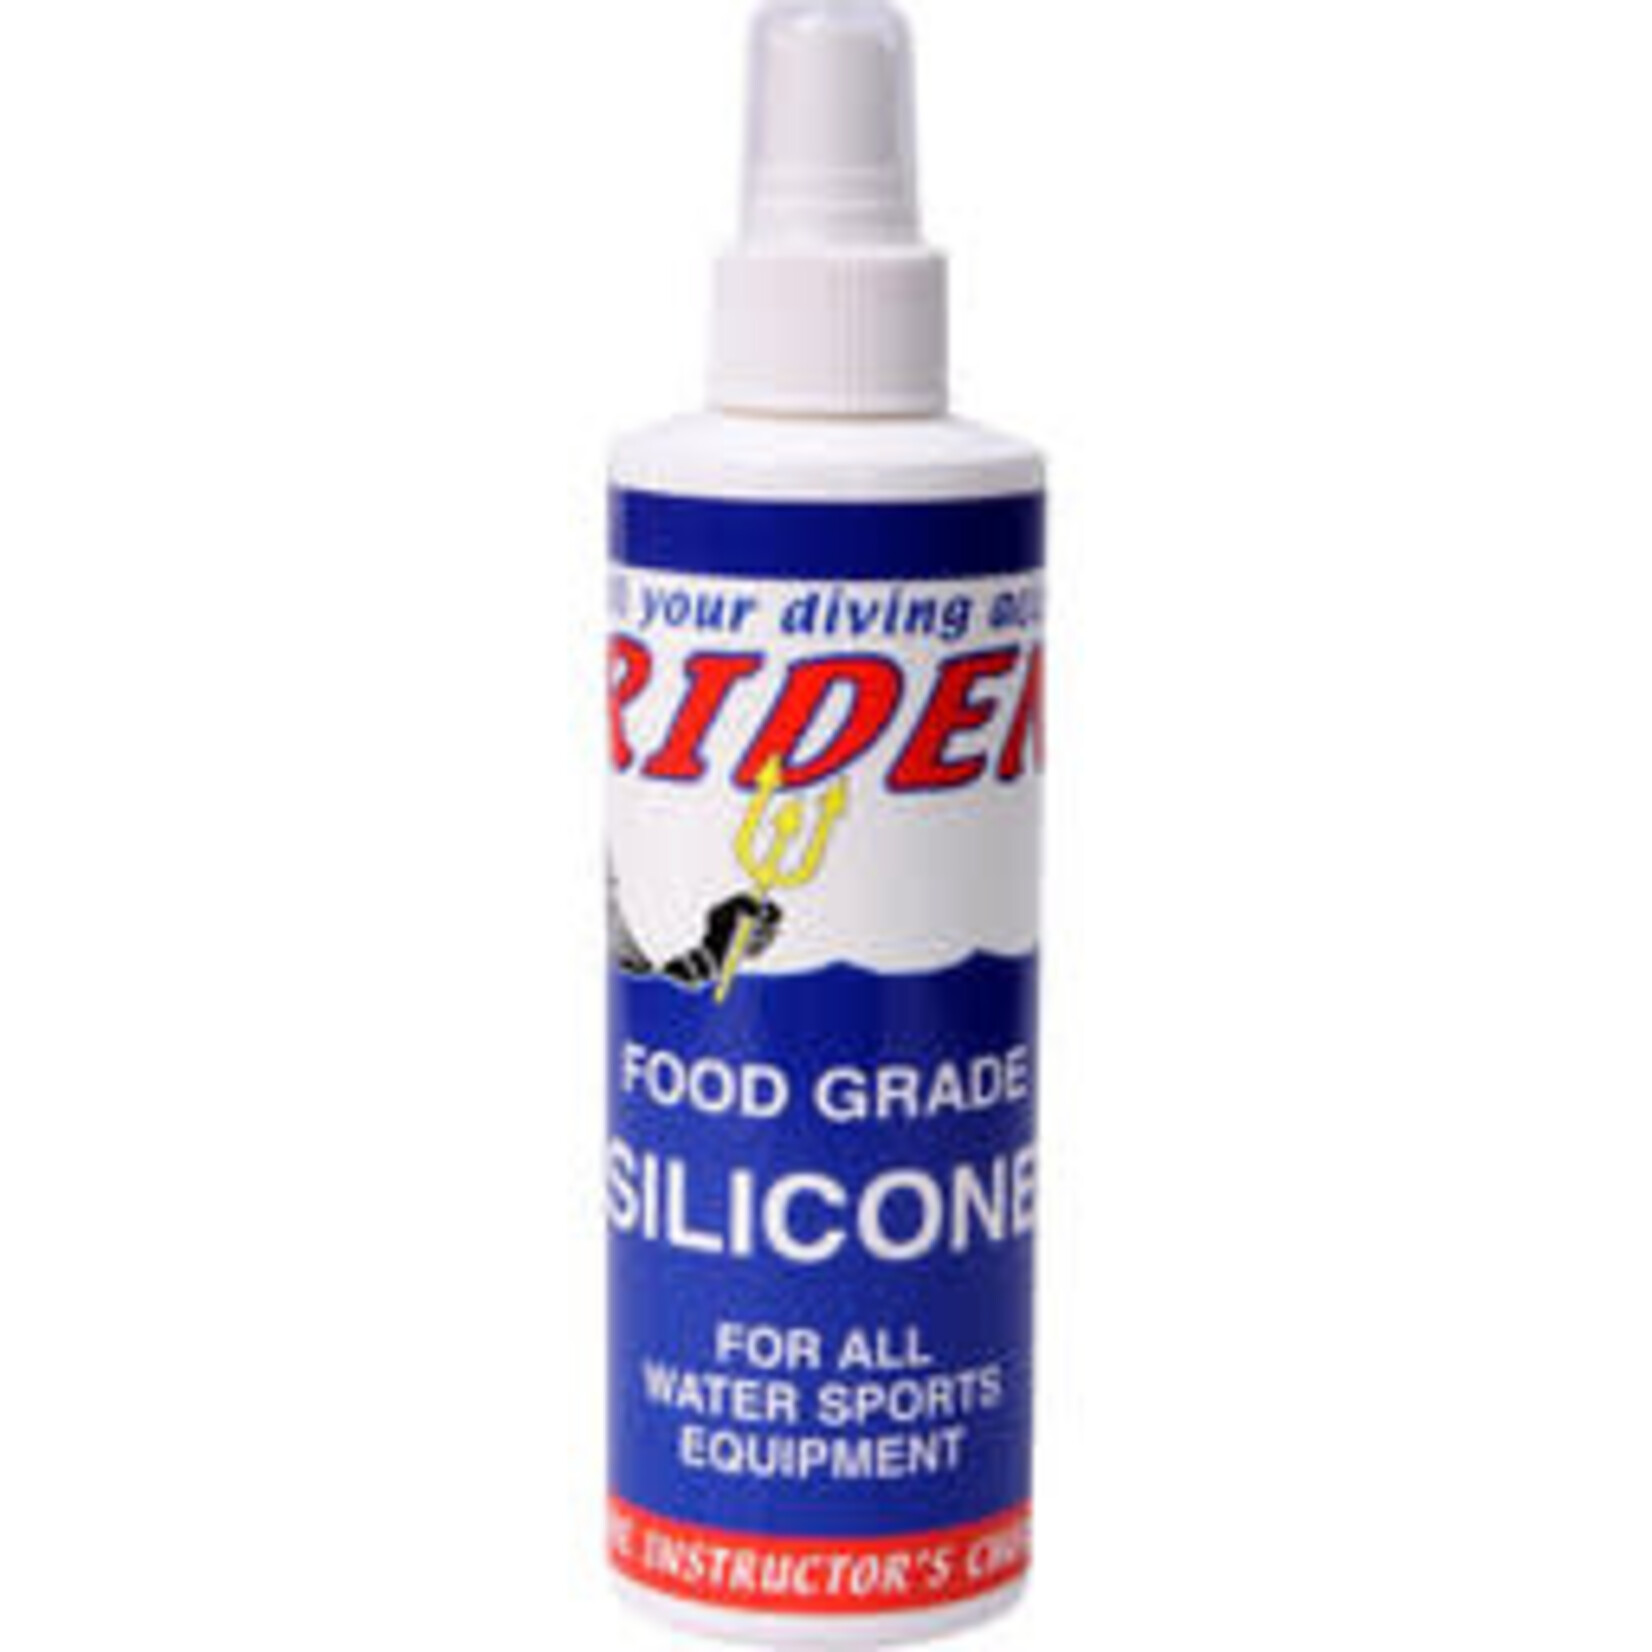 Trident Pure Silicone Pump Spray Lube